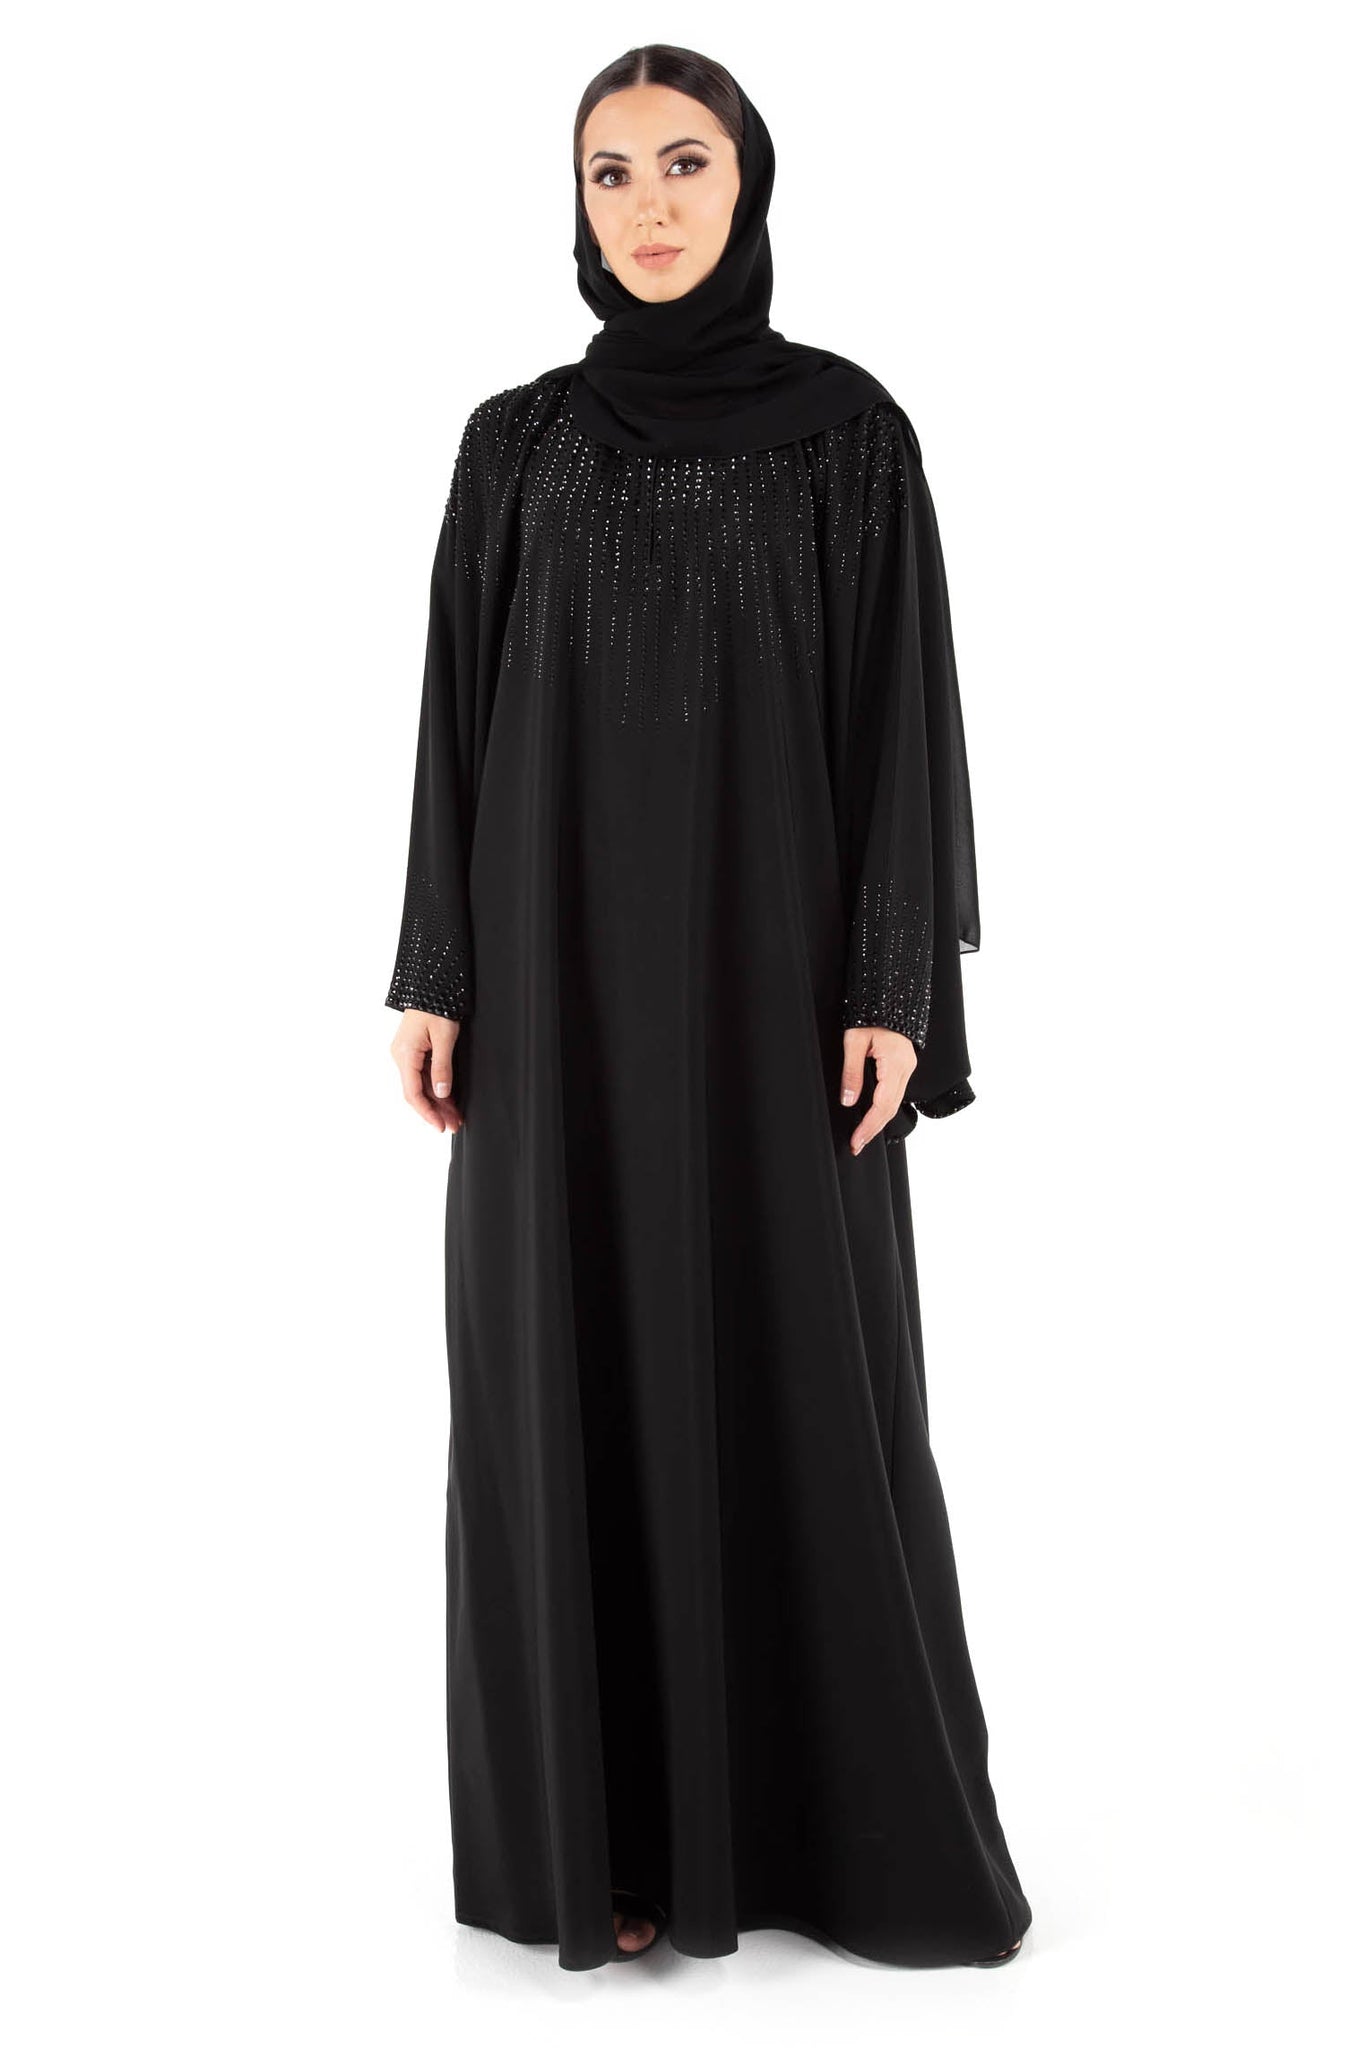 Hanayen Abaya Embellished With Black Crystals